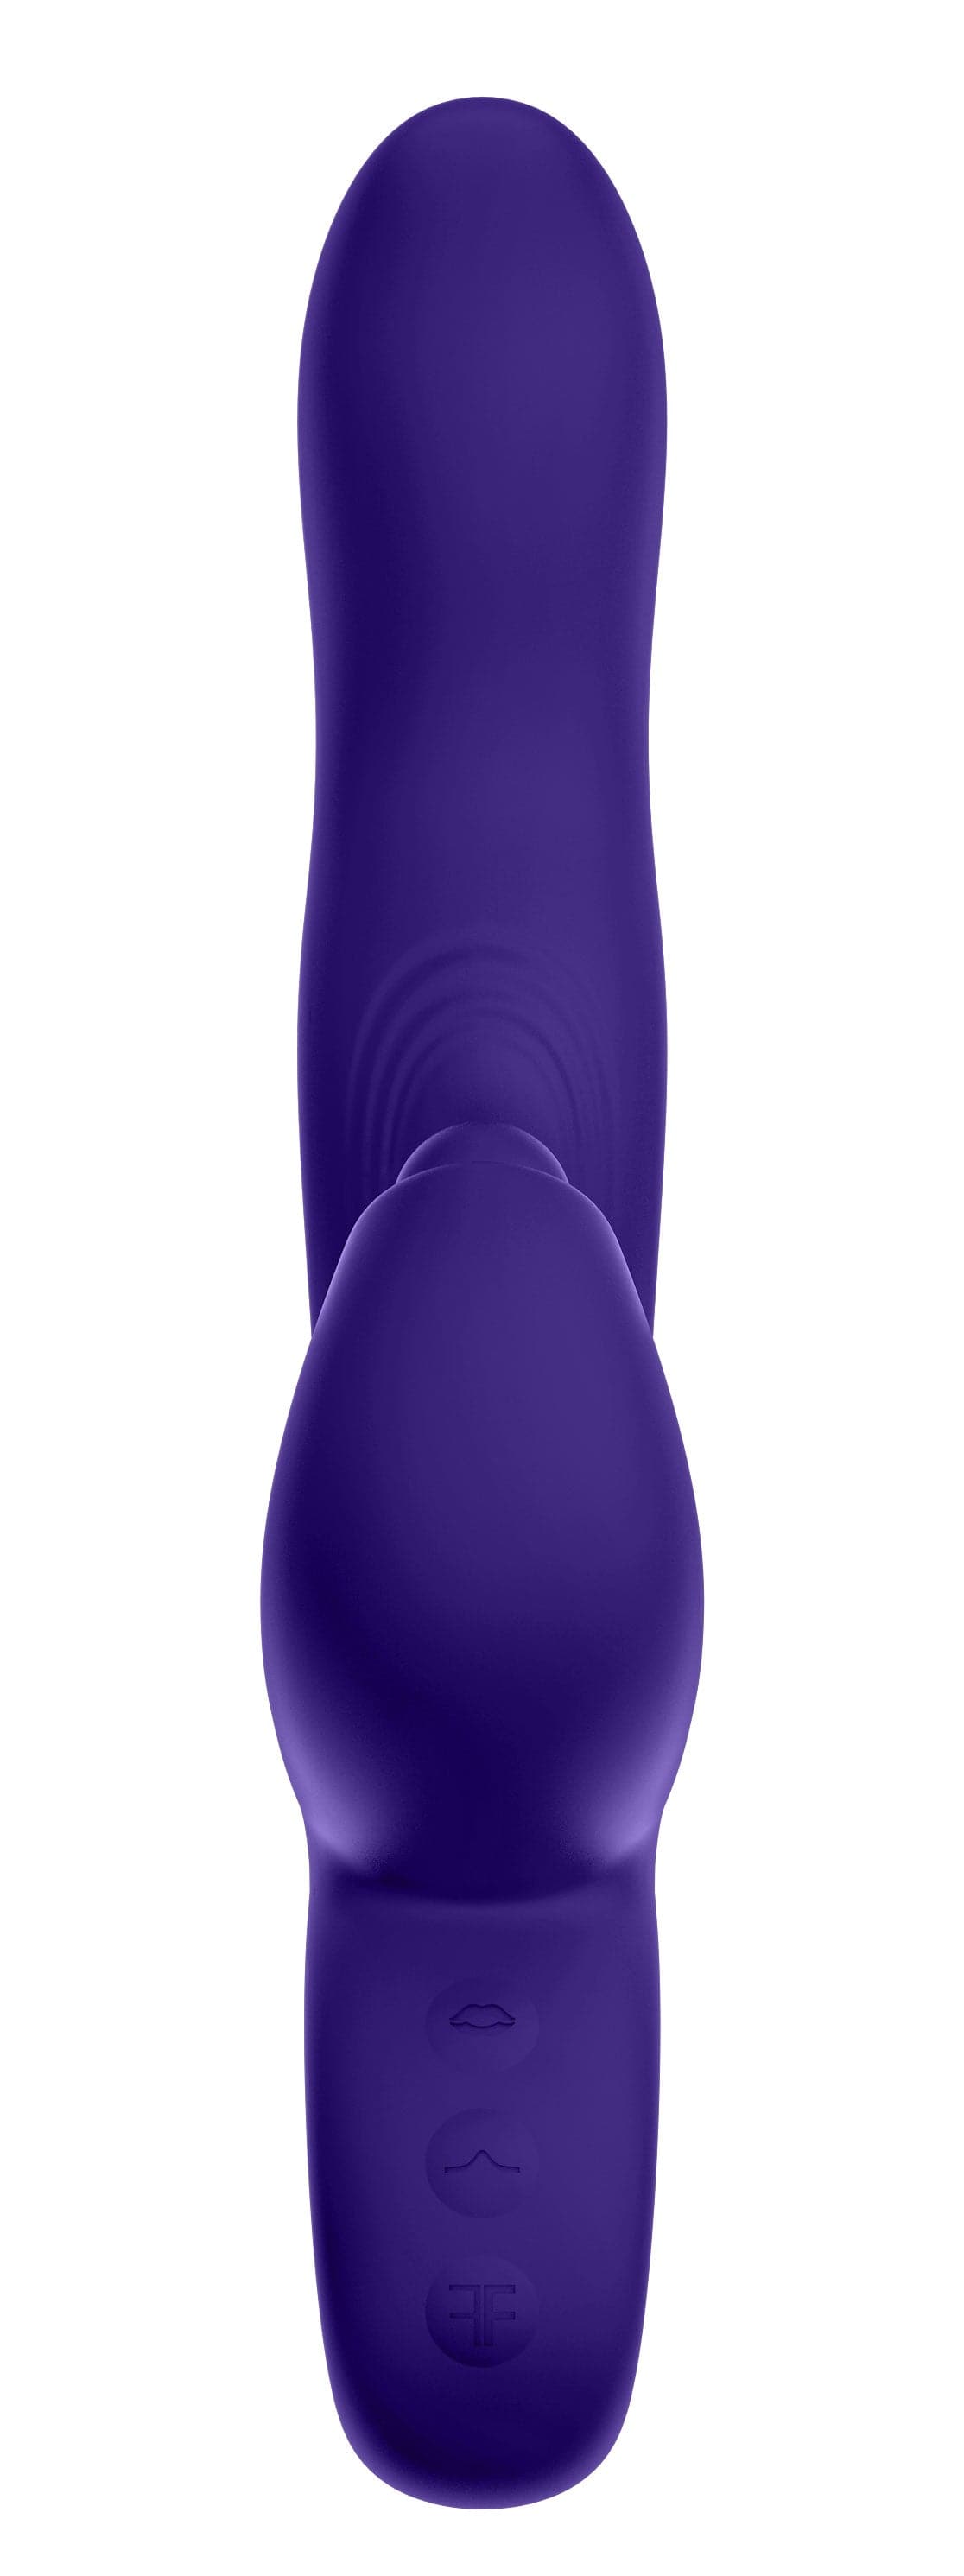 klio triple action thumping rabbit vibrator dark purple